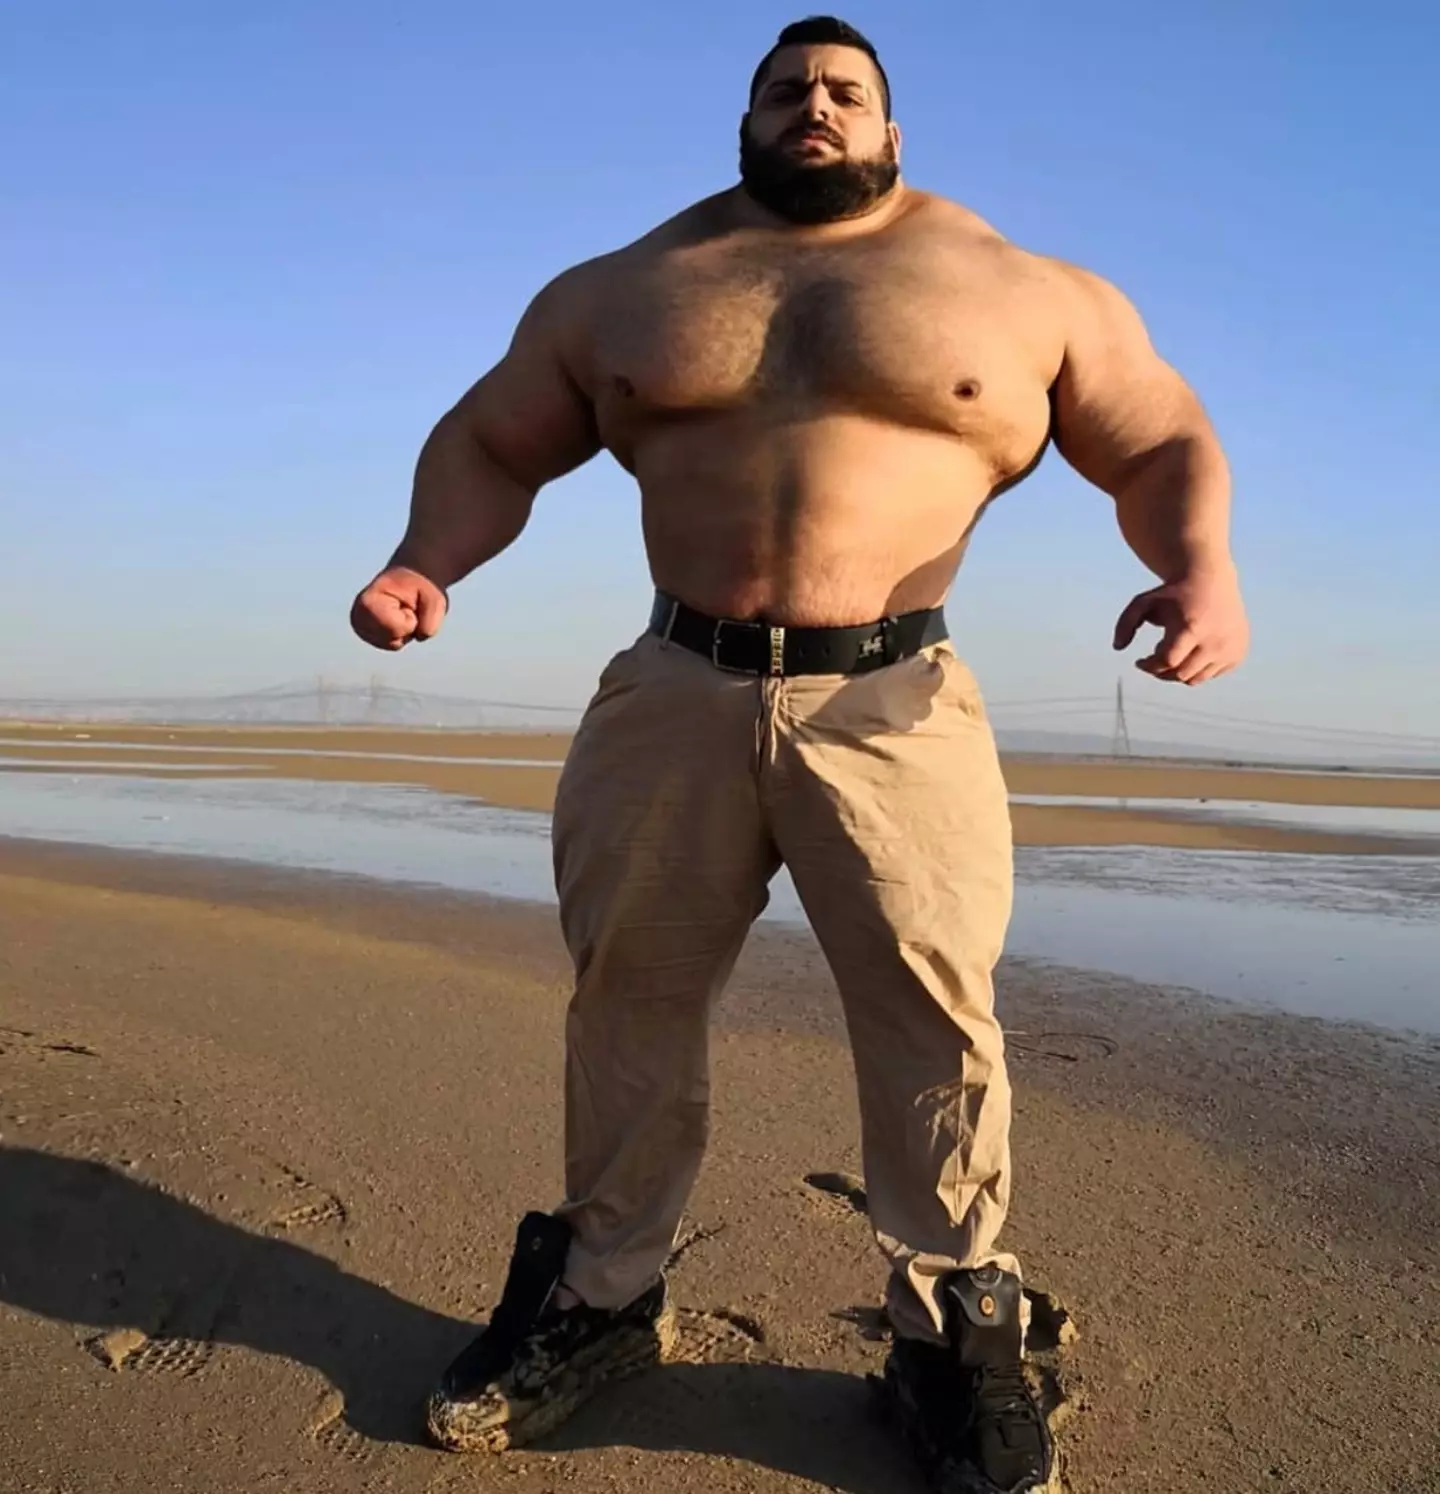 'Iranian Hulk' - real named Sajad Gharibi.